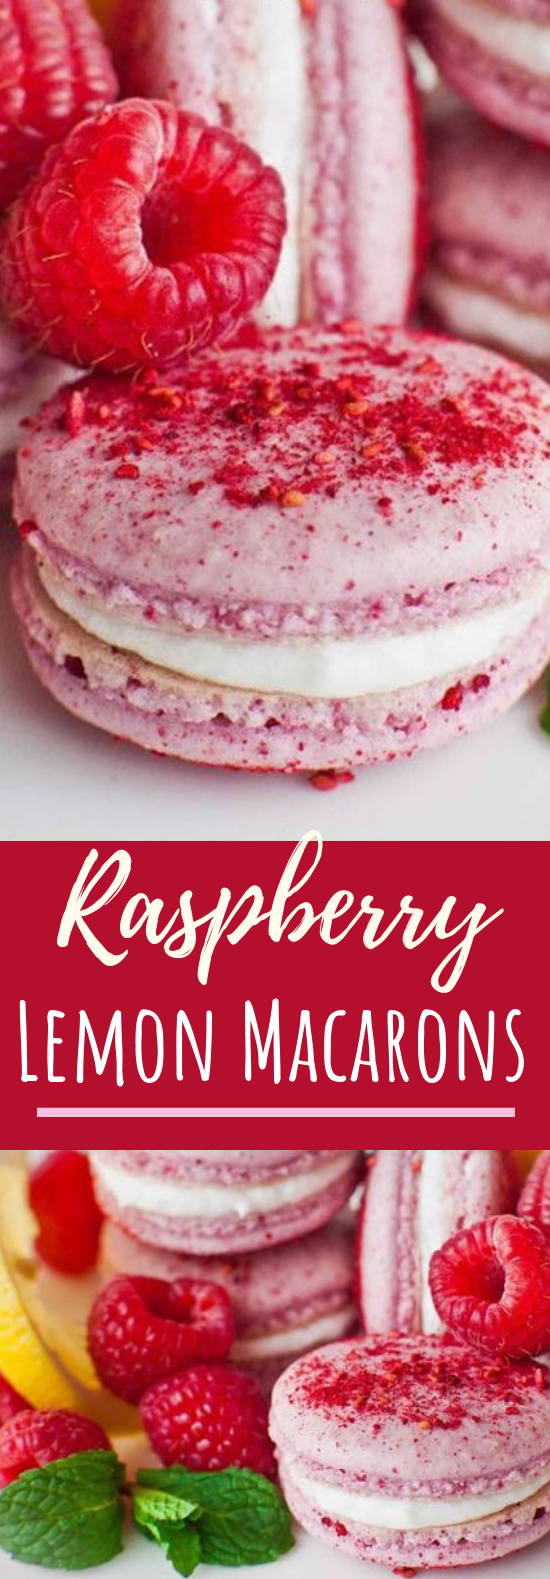 Raspberry Macarons with Lemon Buttercream #cookies #desserts